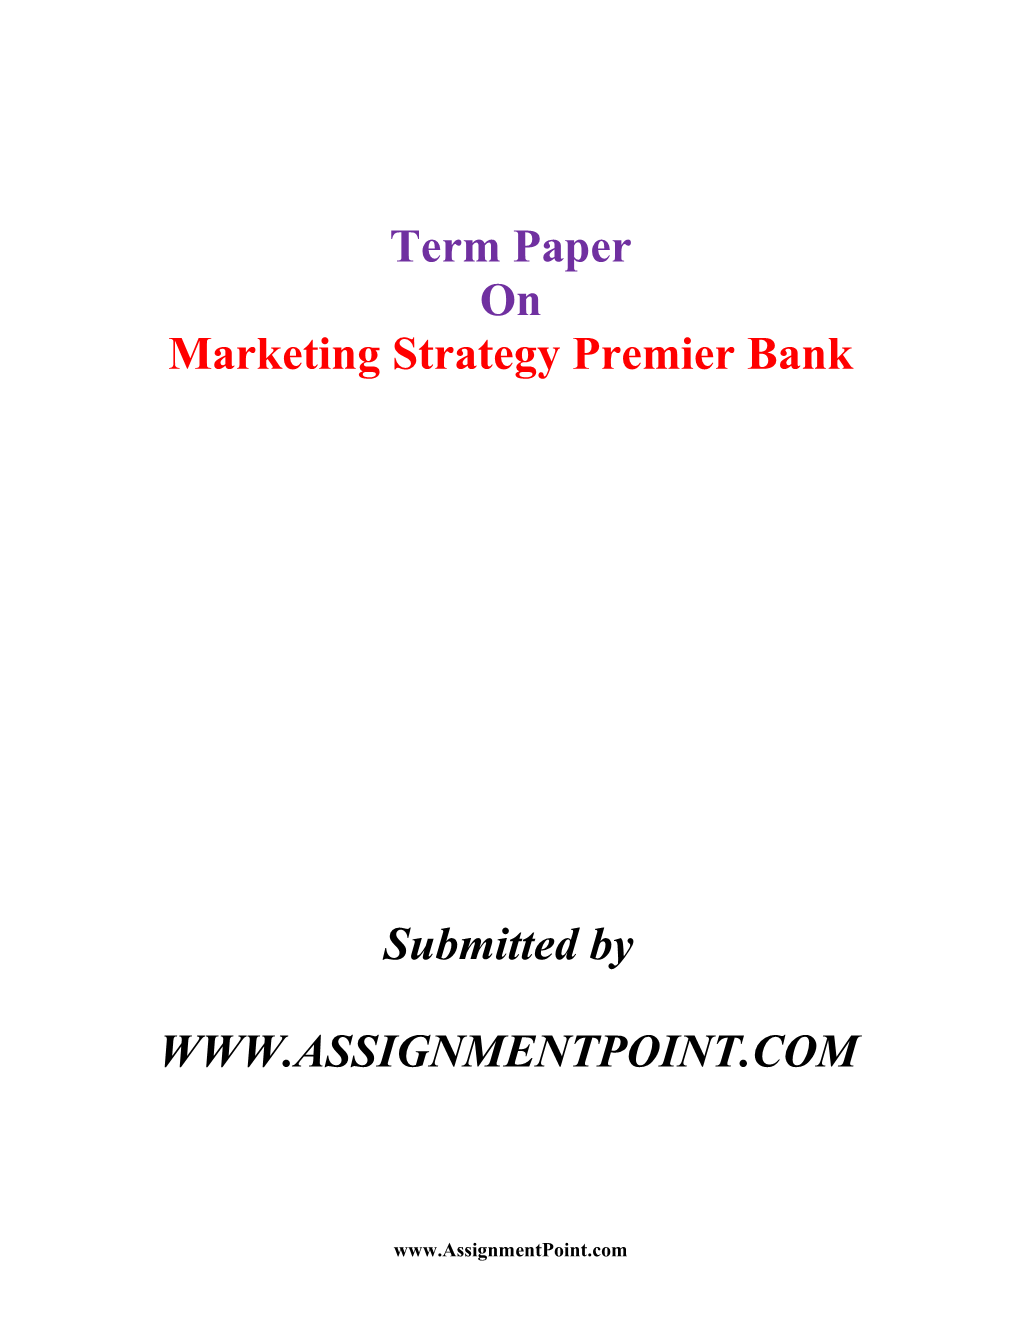 Marketing Strategy Premier Bank